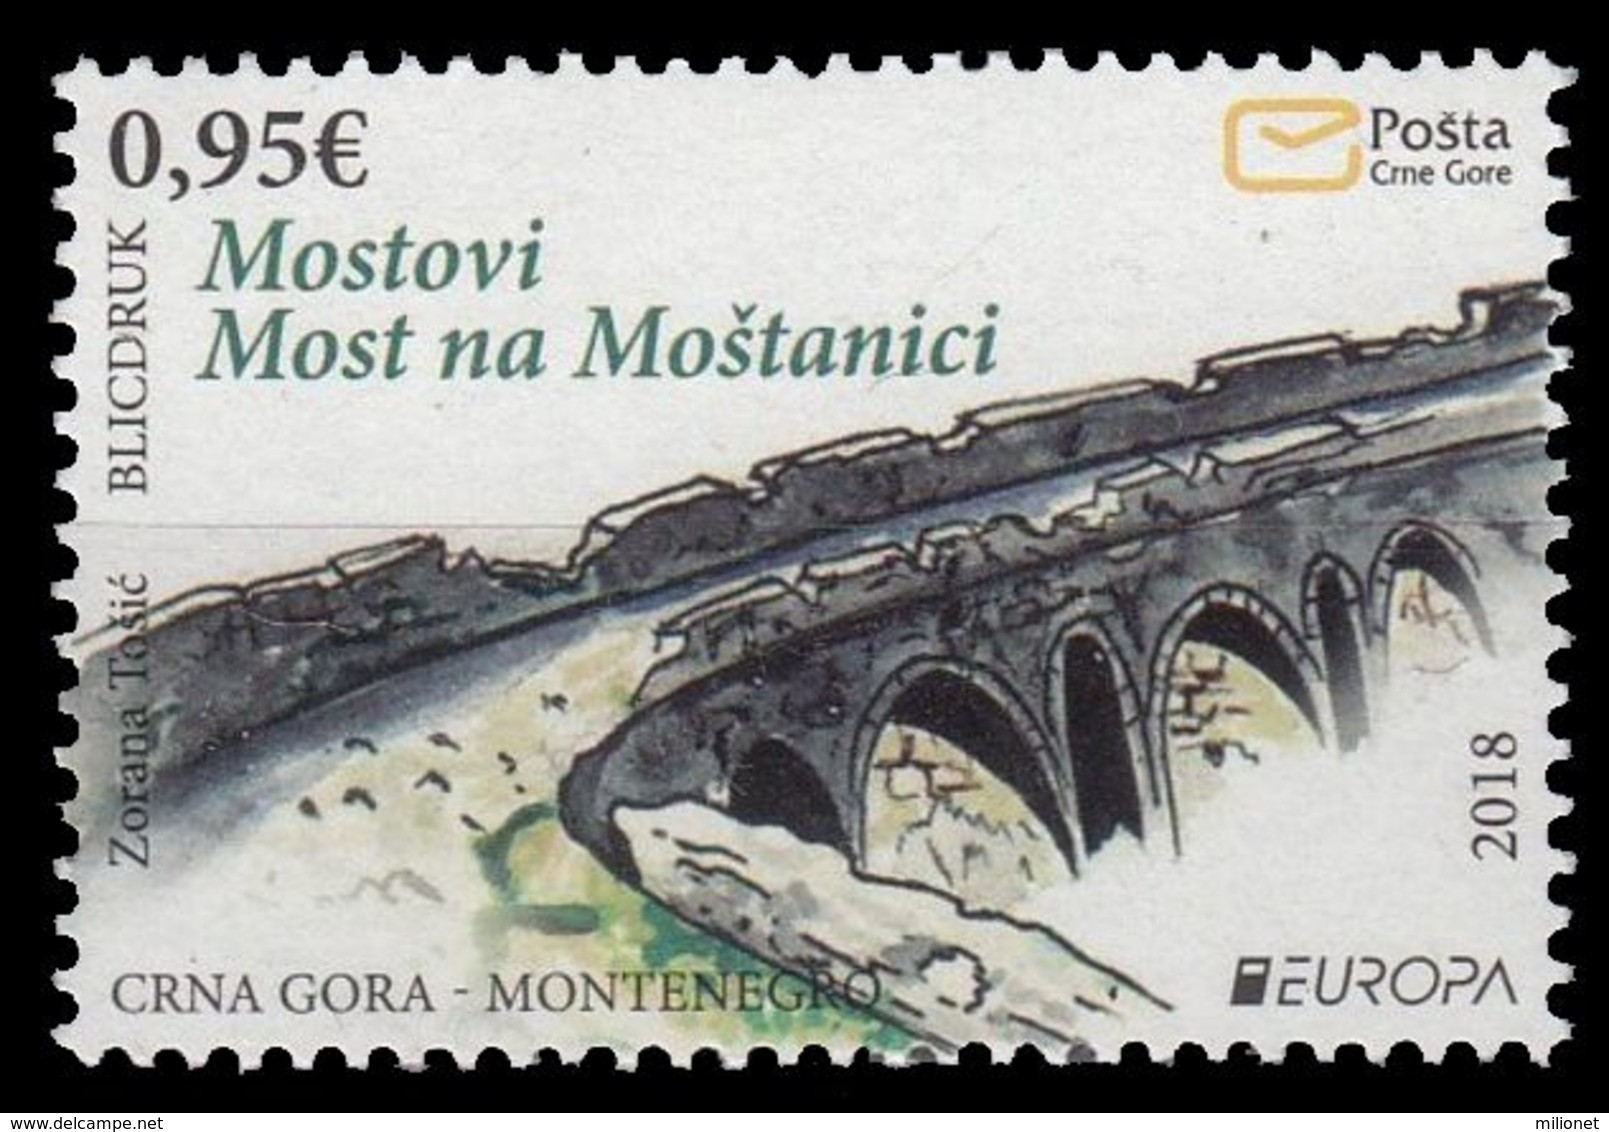 SALE!!! Montenegro 2018 EUROPA CEPT BRIDGES 1 Stamp Set MNH ** - 2018